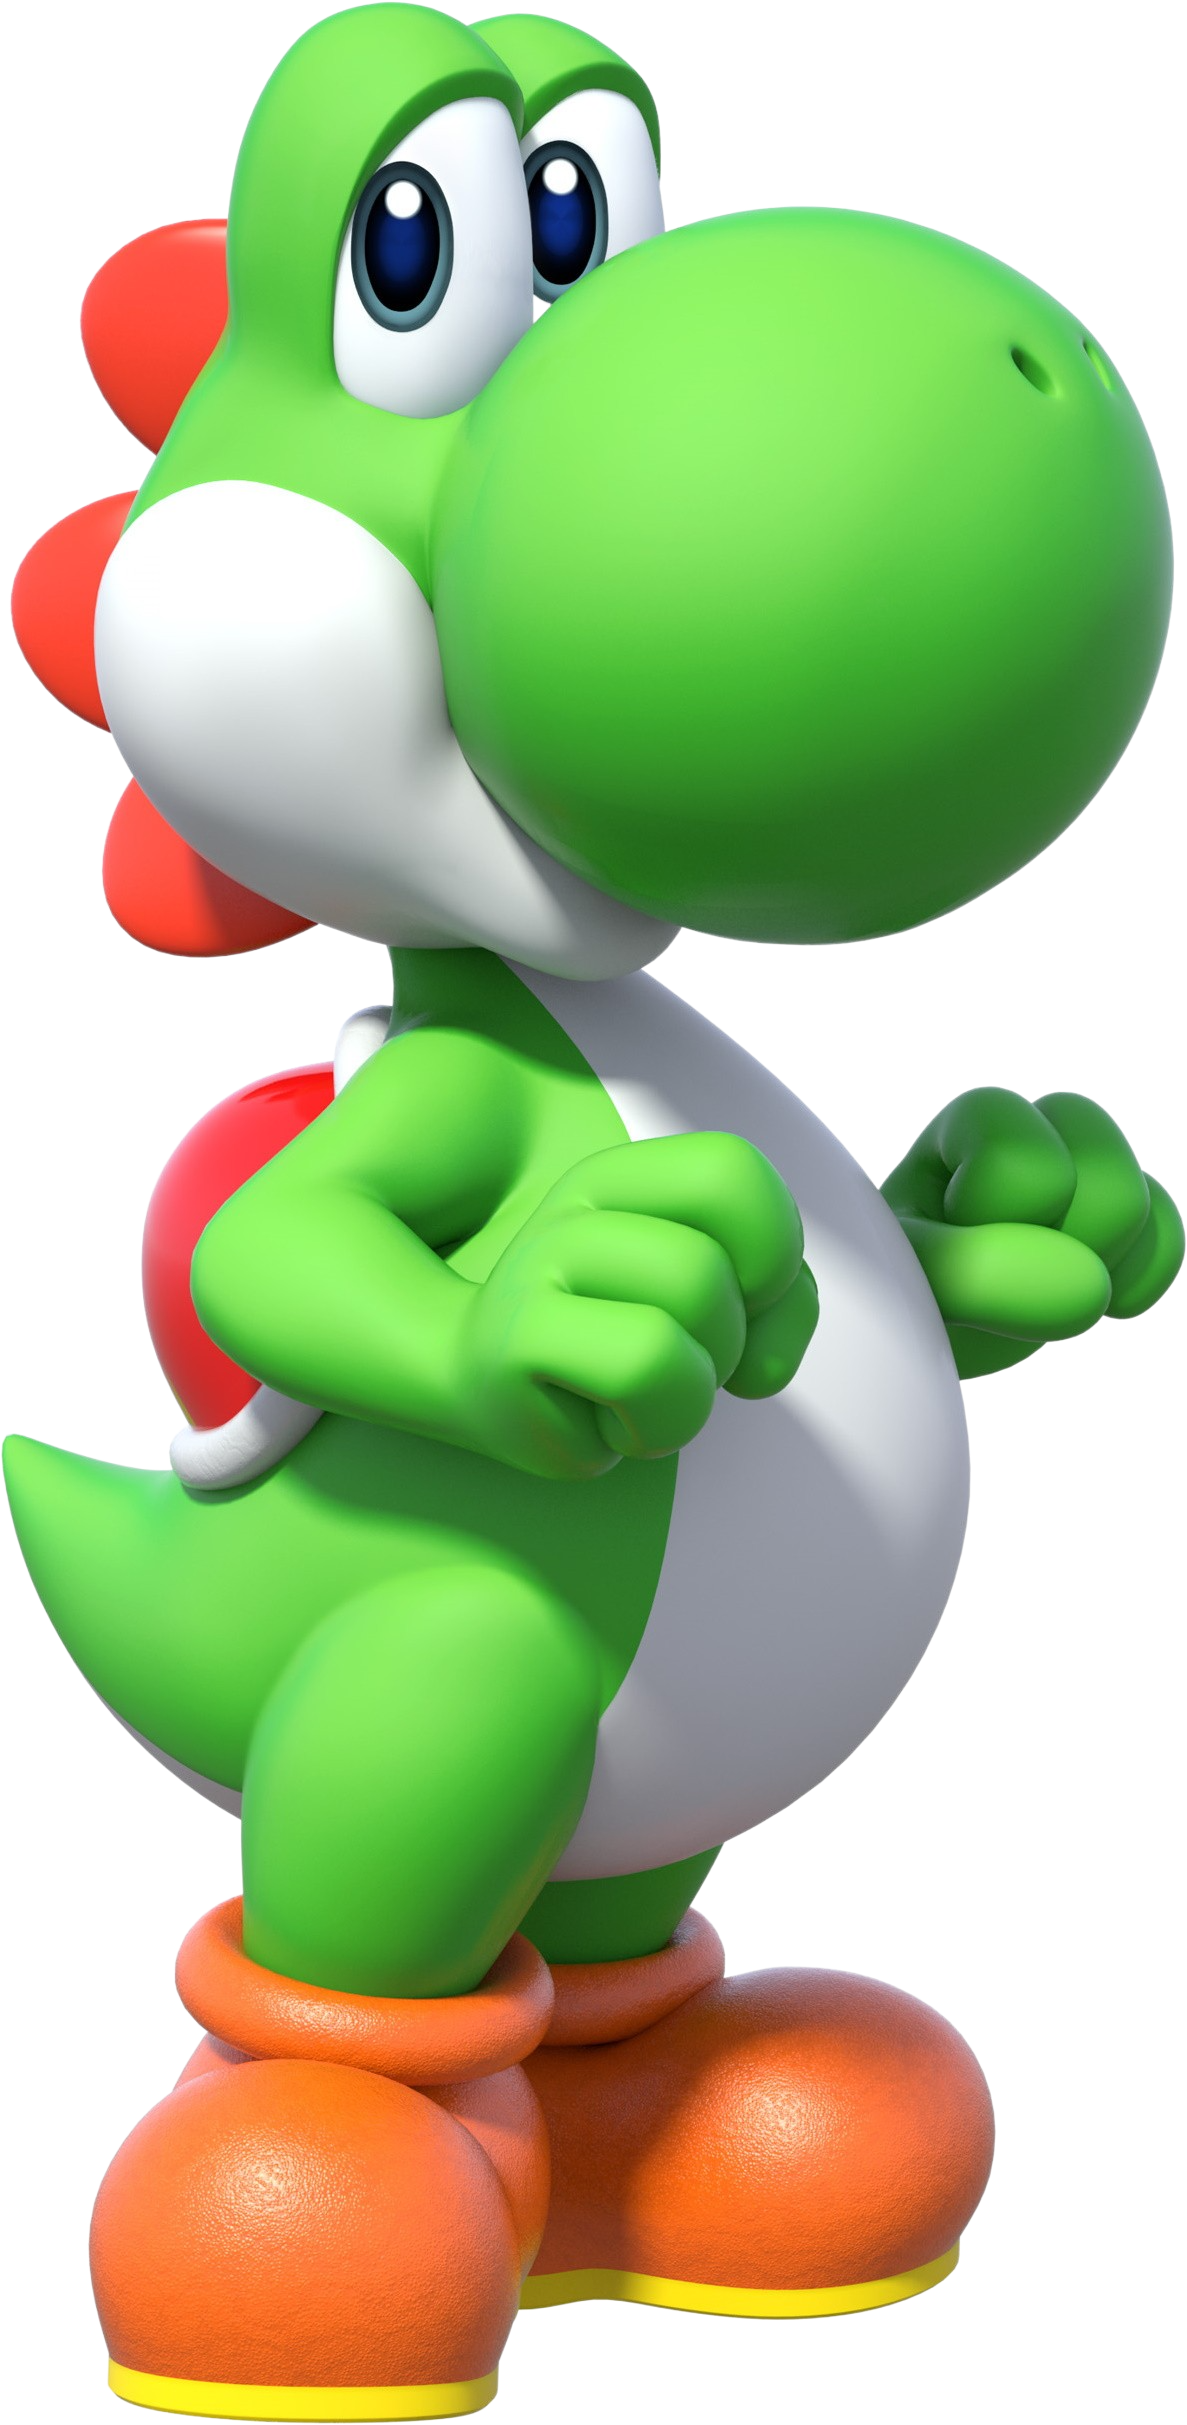 Yoshi (character), MarioWiki